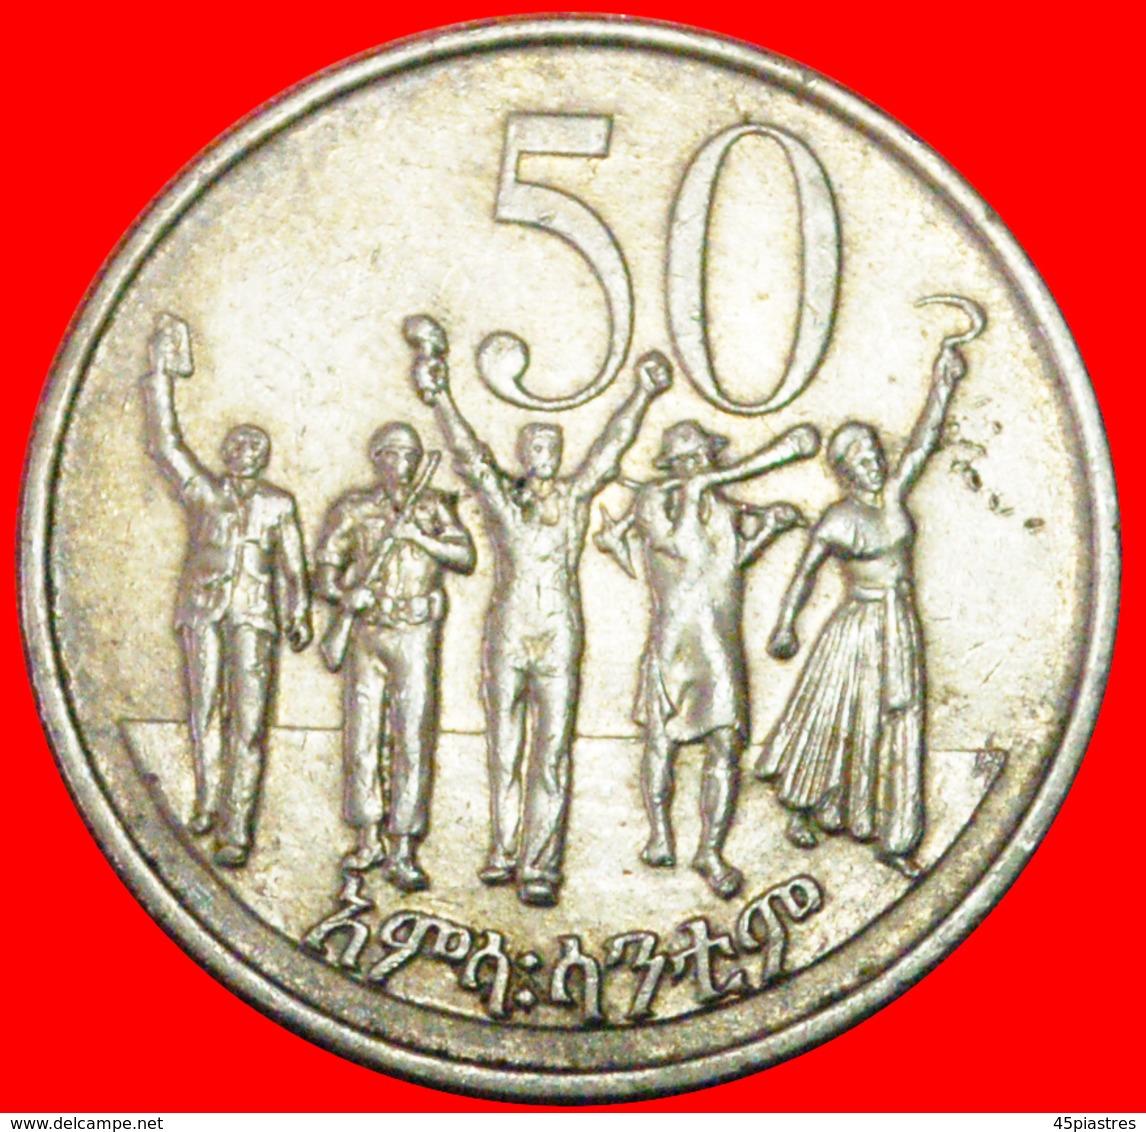 # GREAT BRITAIN: ETHIOPIA ★ 50 CENTS 1969 (1977)! LOW START ★ NO RESERVE! - Ethiopia